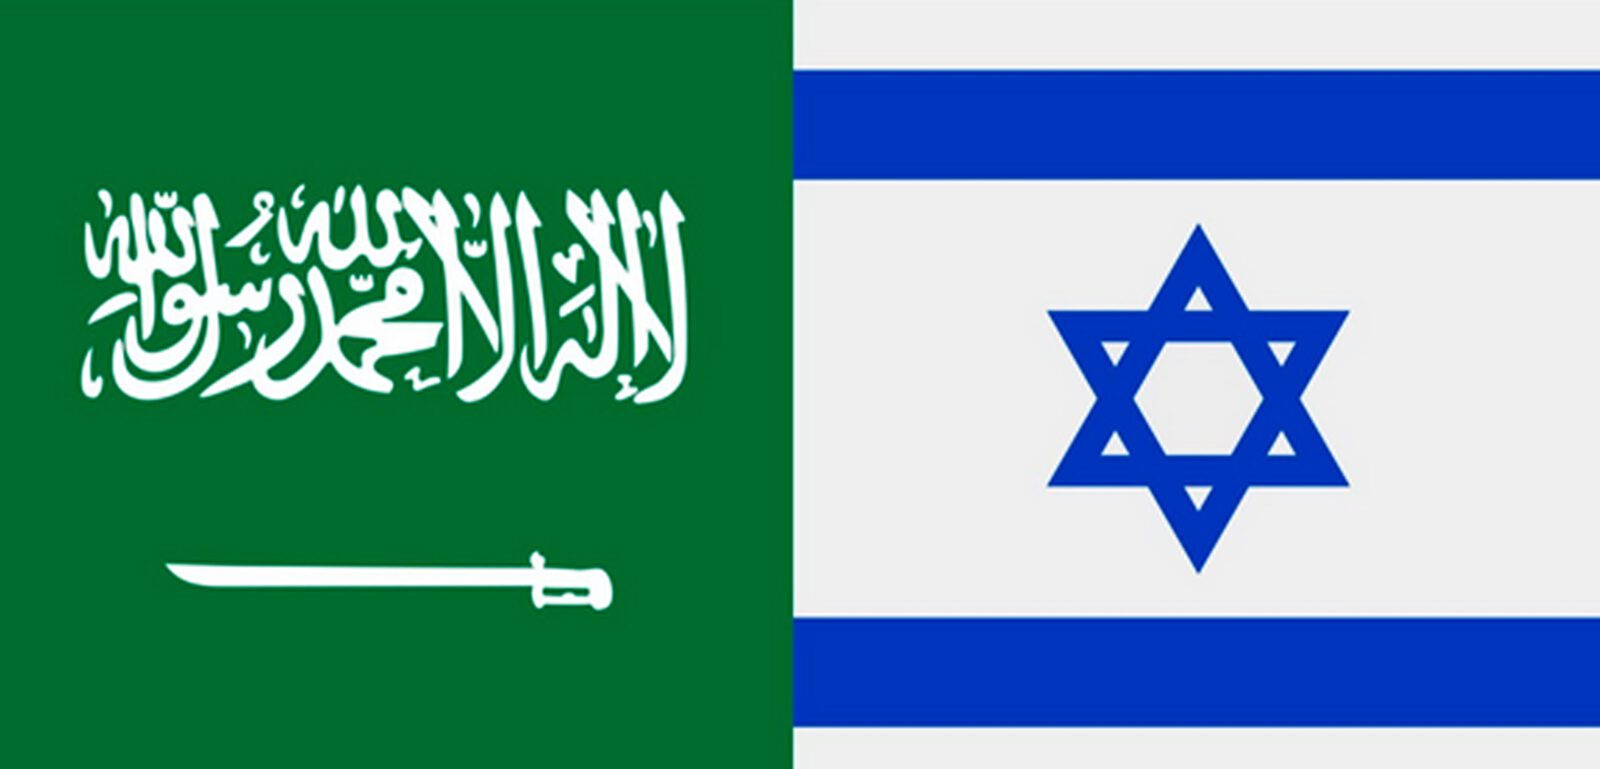 Israel and Saudi Arabia move closer to peace agreement